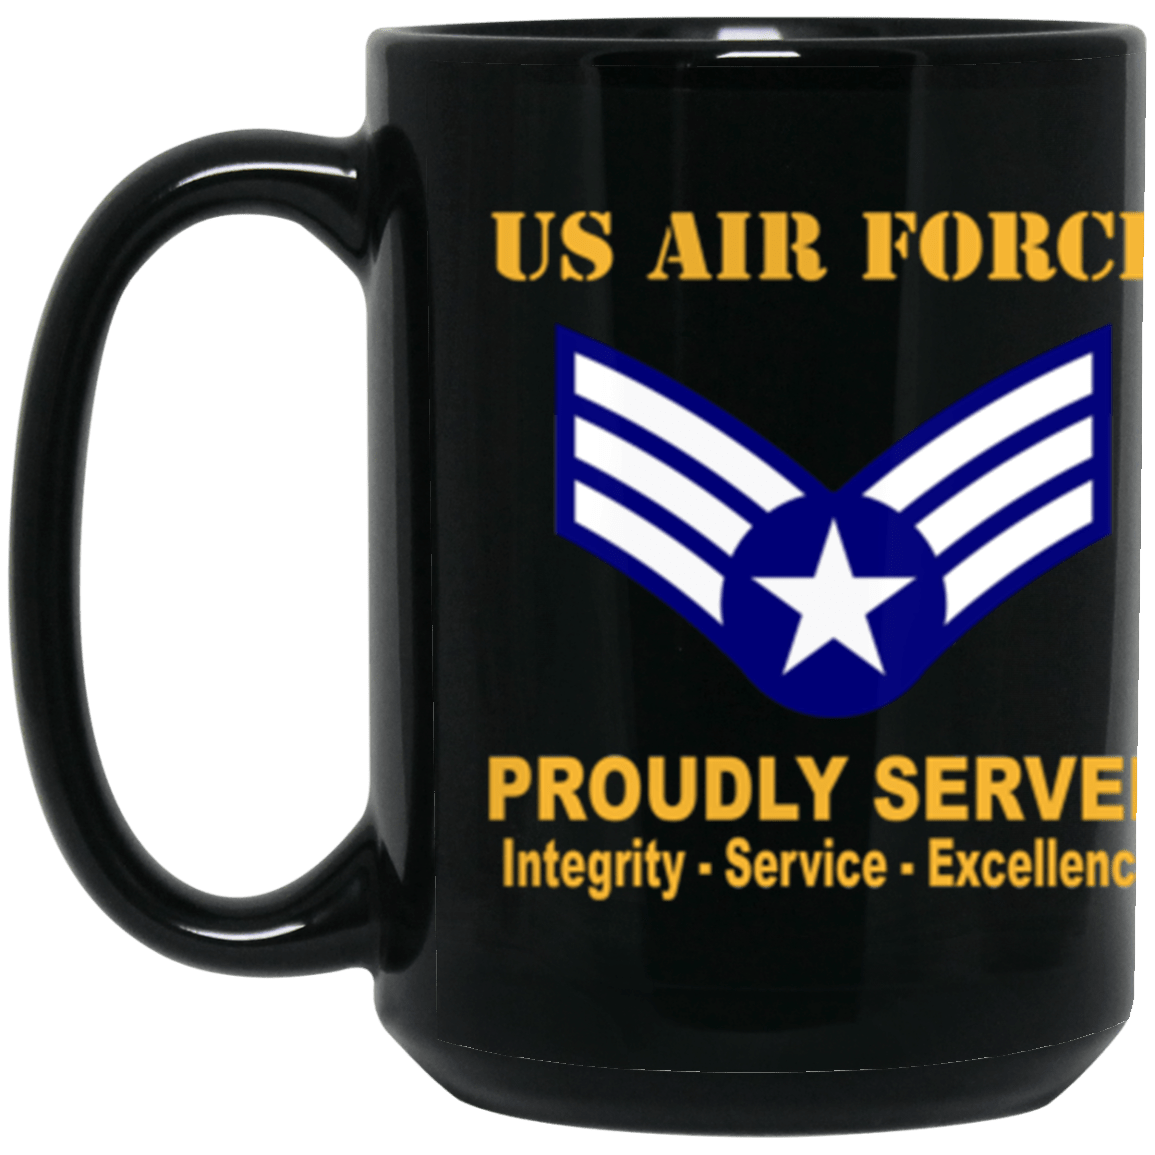 US Air Force E-4 Buck Sergeant Proudly Served Core Values 15 oz. Black Mug-Mug-USAF-Ranks-Veterans Nation